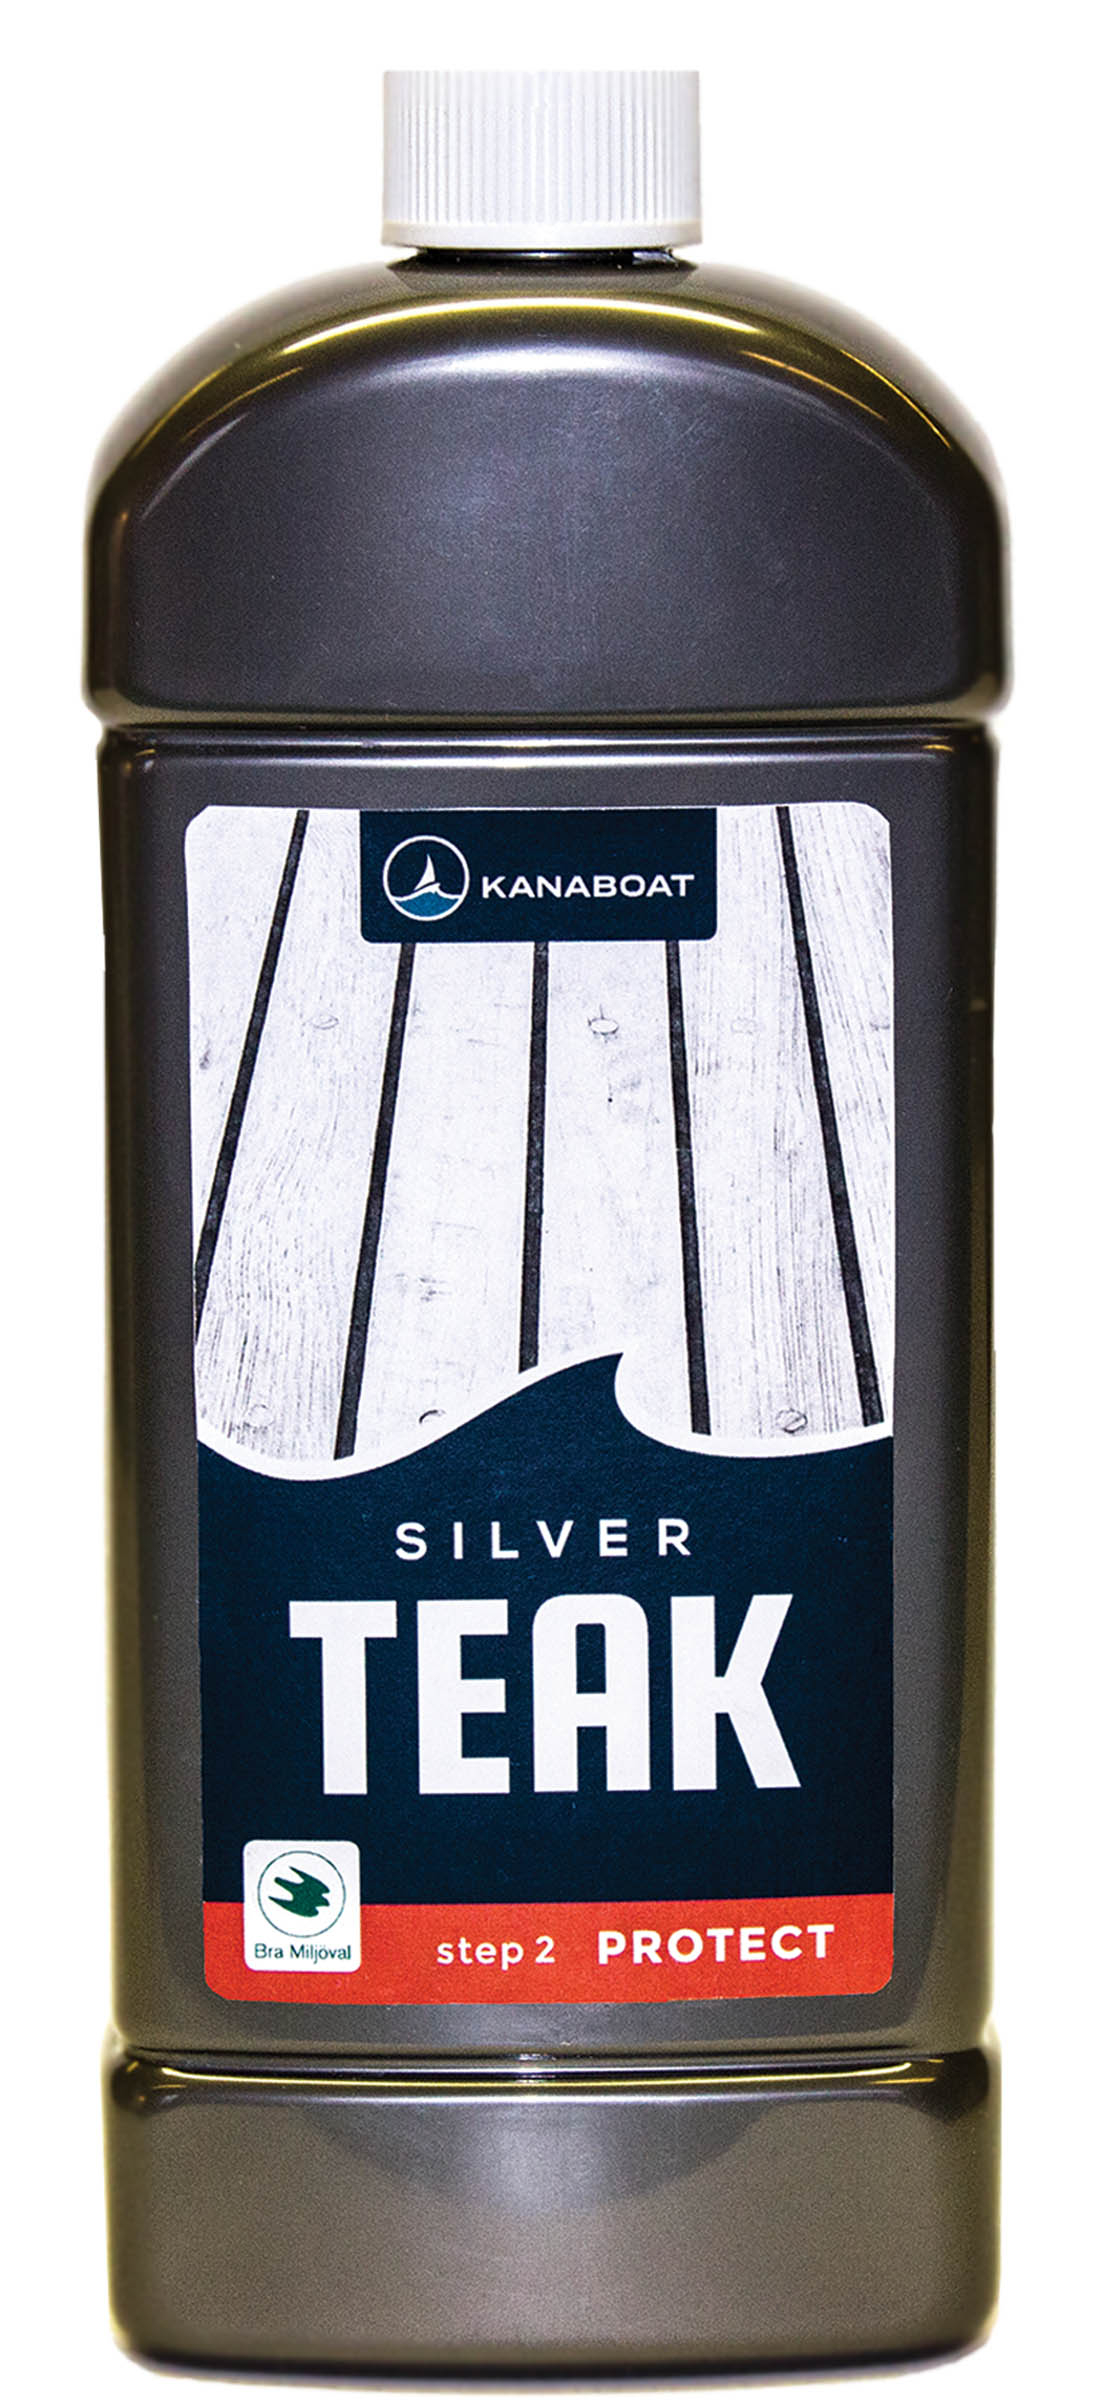 Kanaboat silver teak protect 05 lit